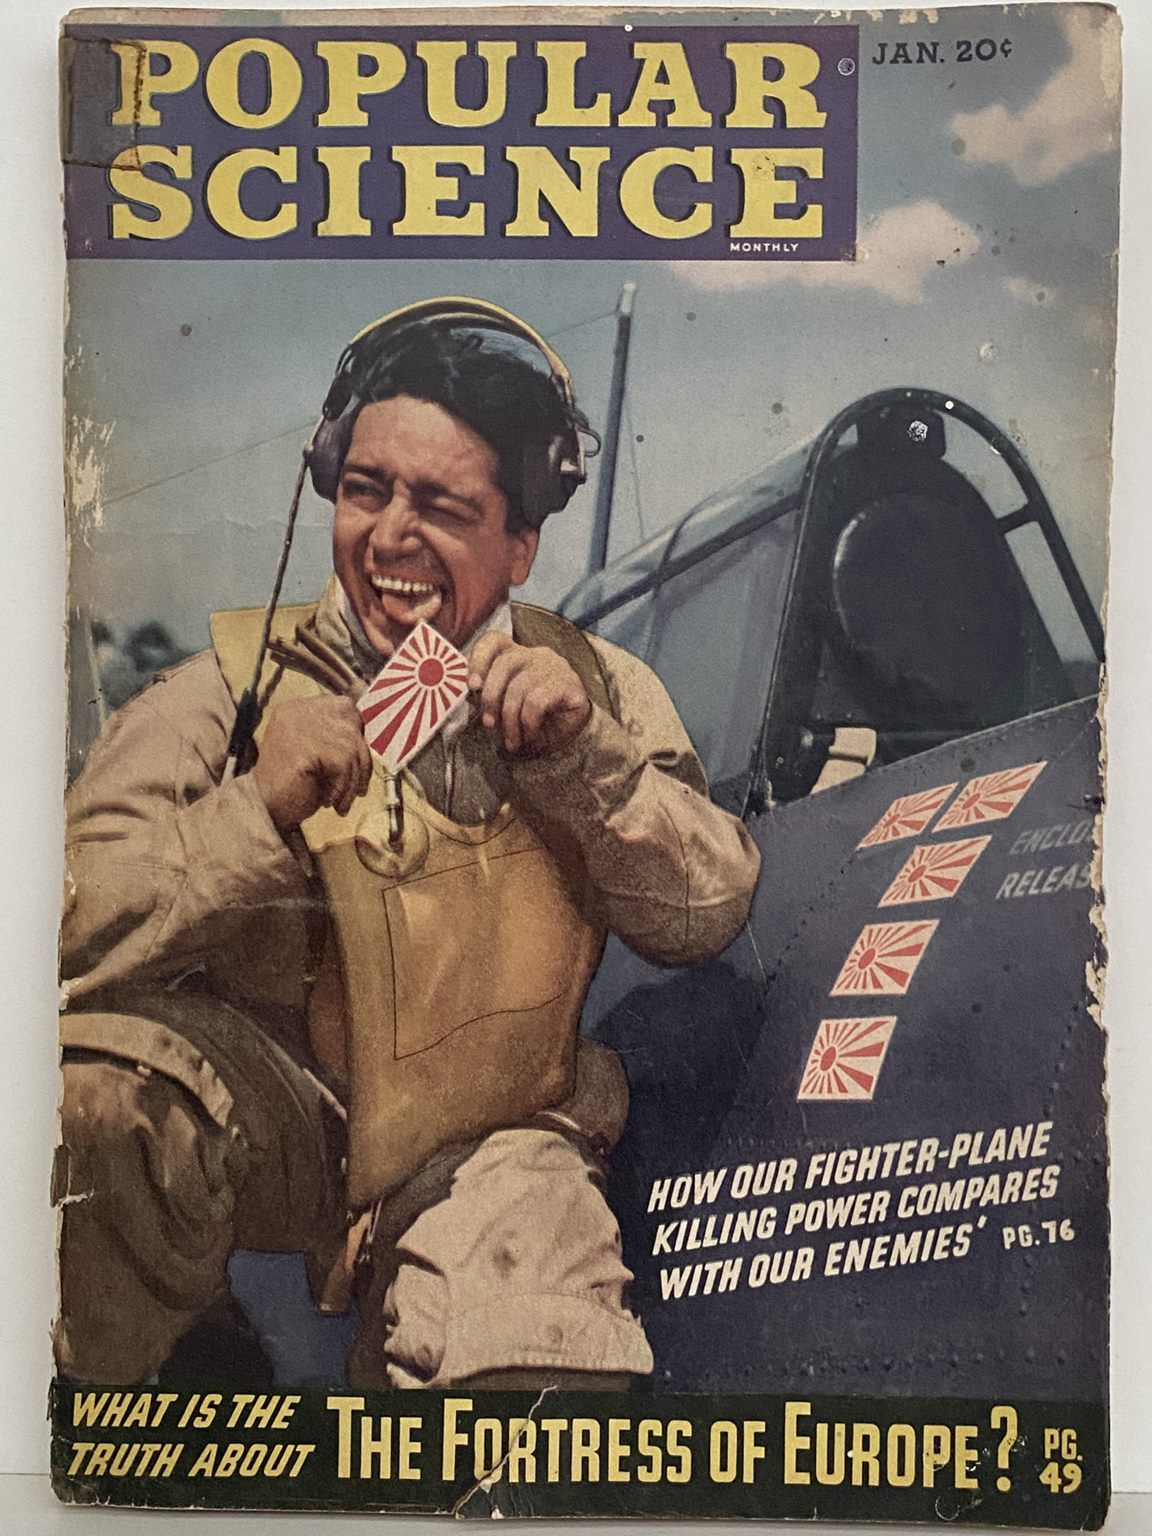 VINTAGE MAGAZINE: Popular Science, Vol. 144, No. 1 - January 1944